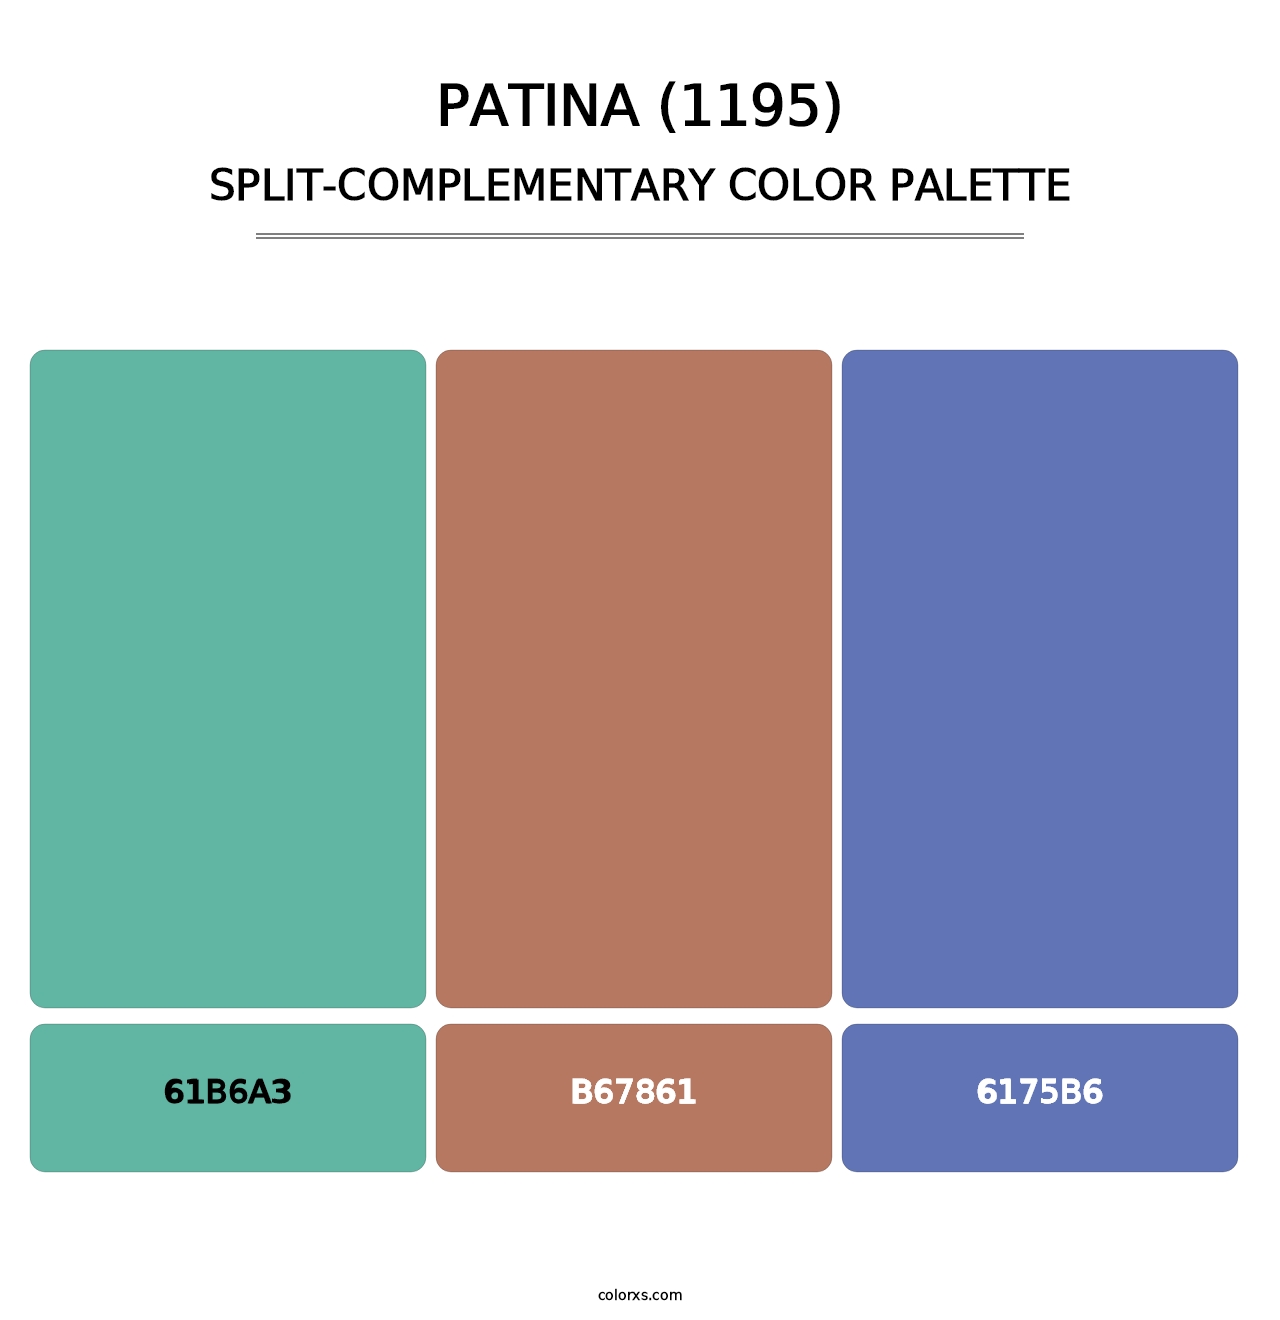 Patina (1195) - Split-Complementary Color Palette